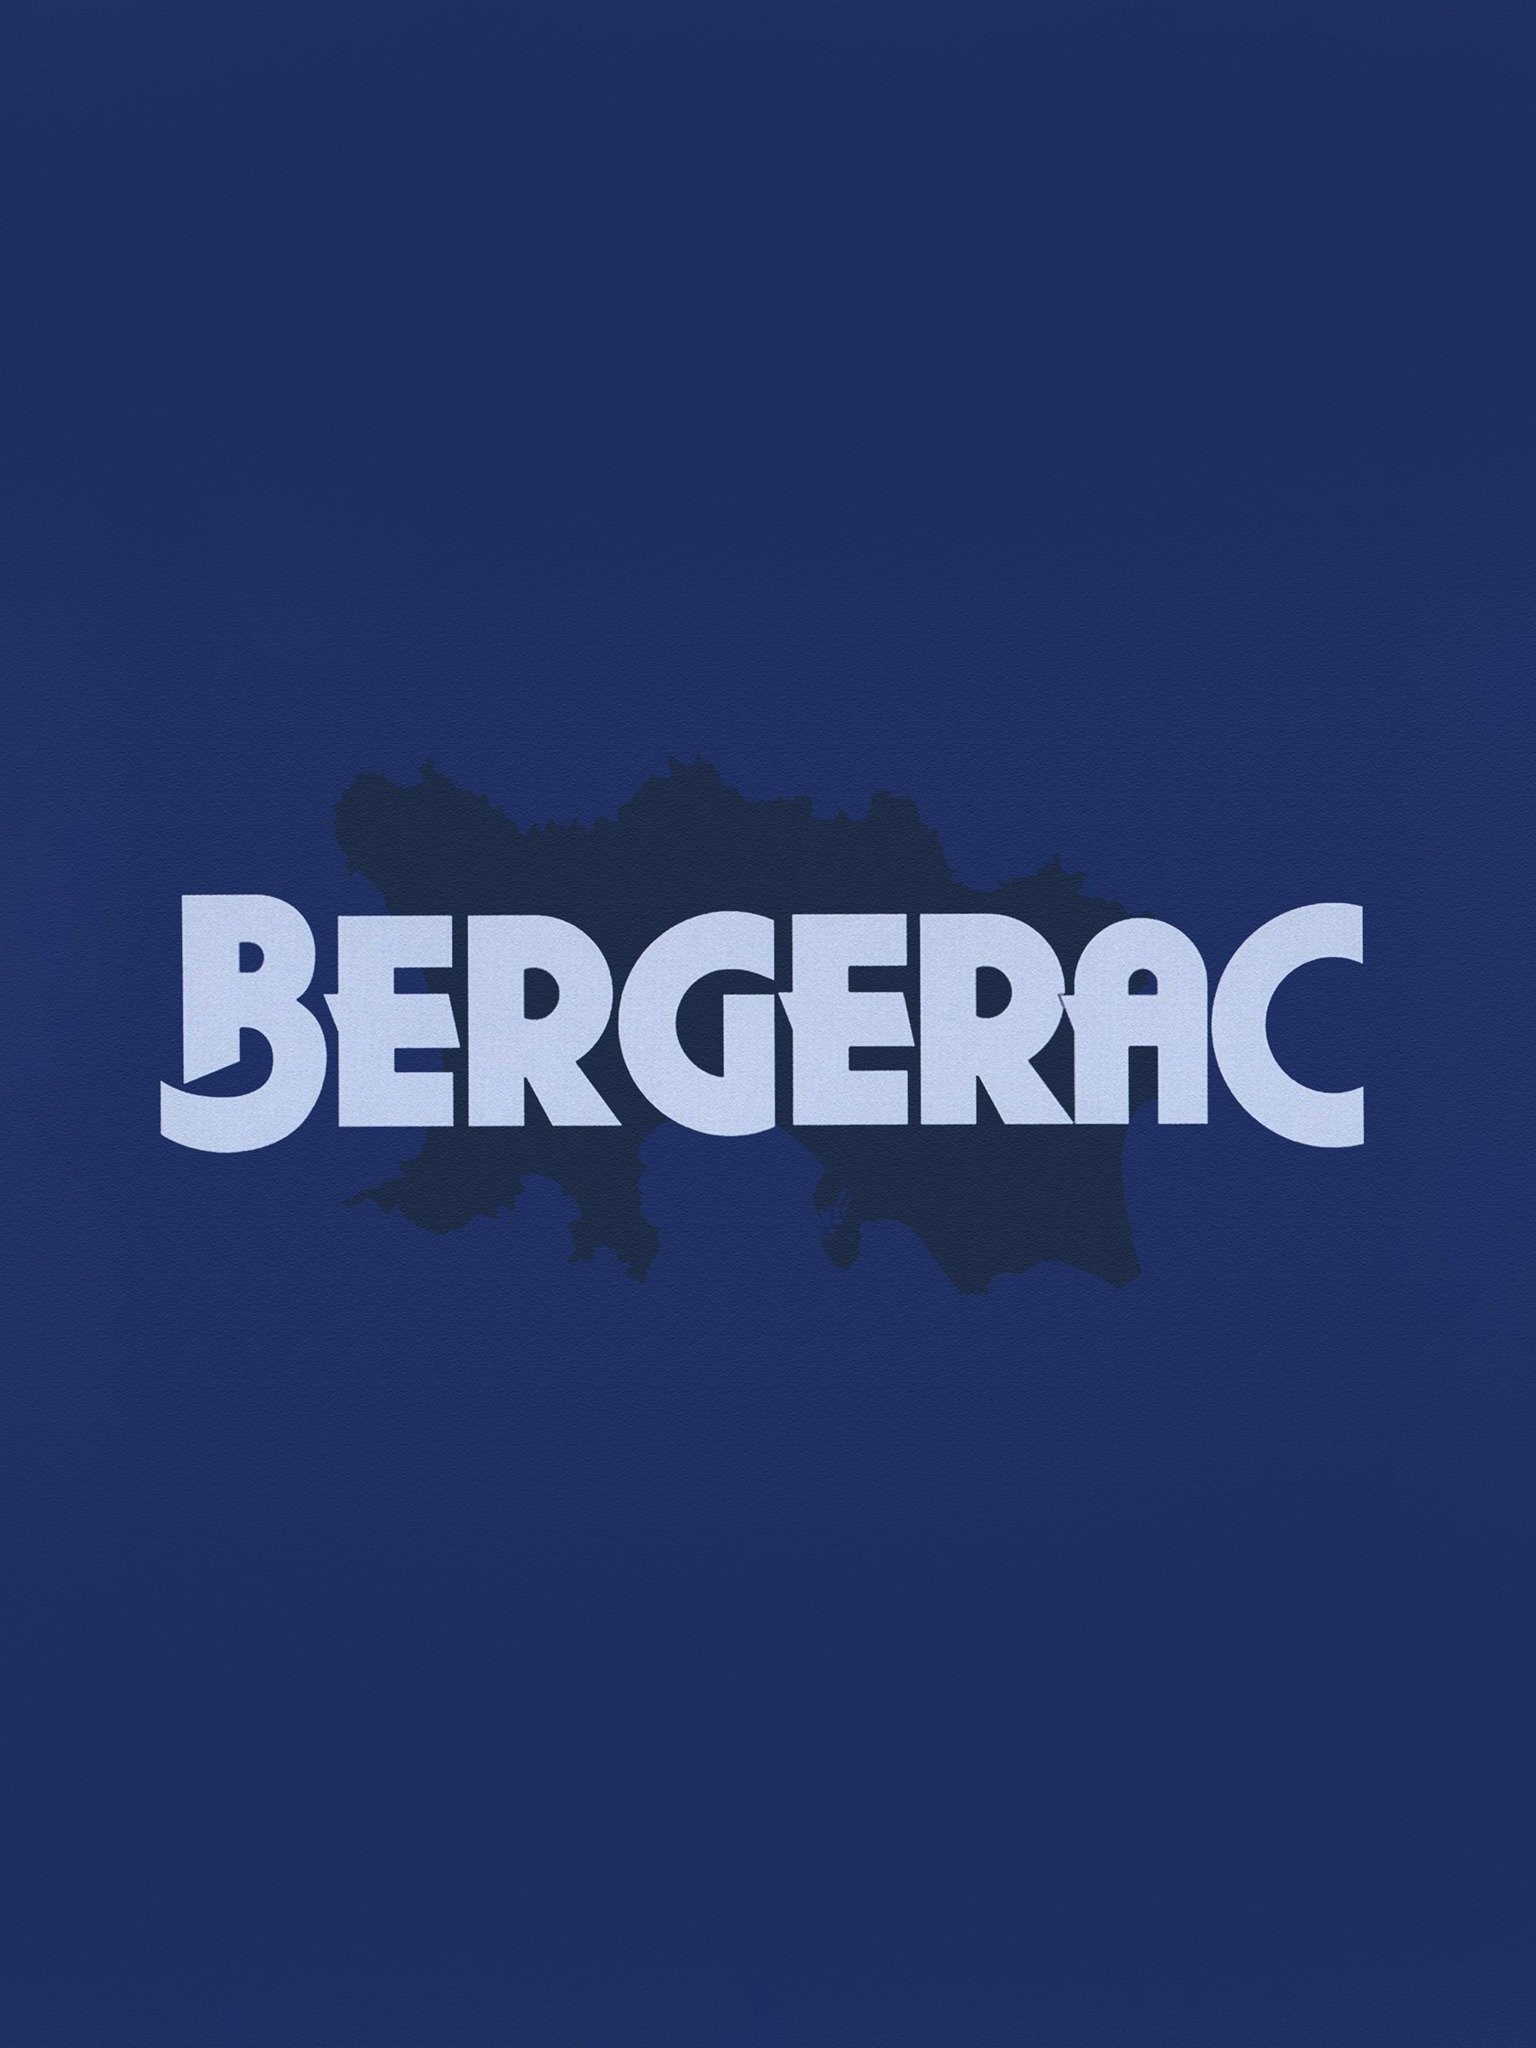 Bergerac - Rotten Tomatoes